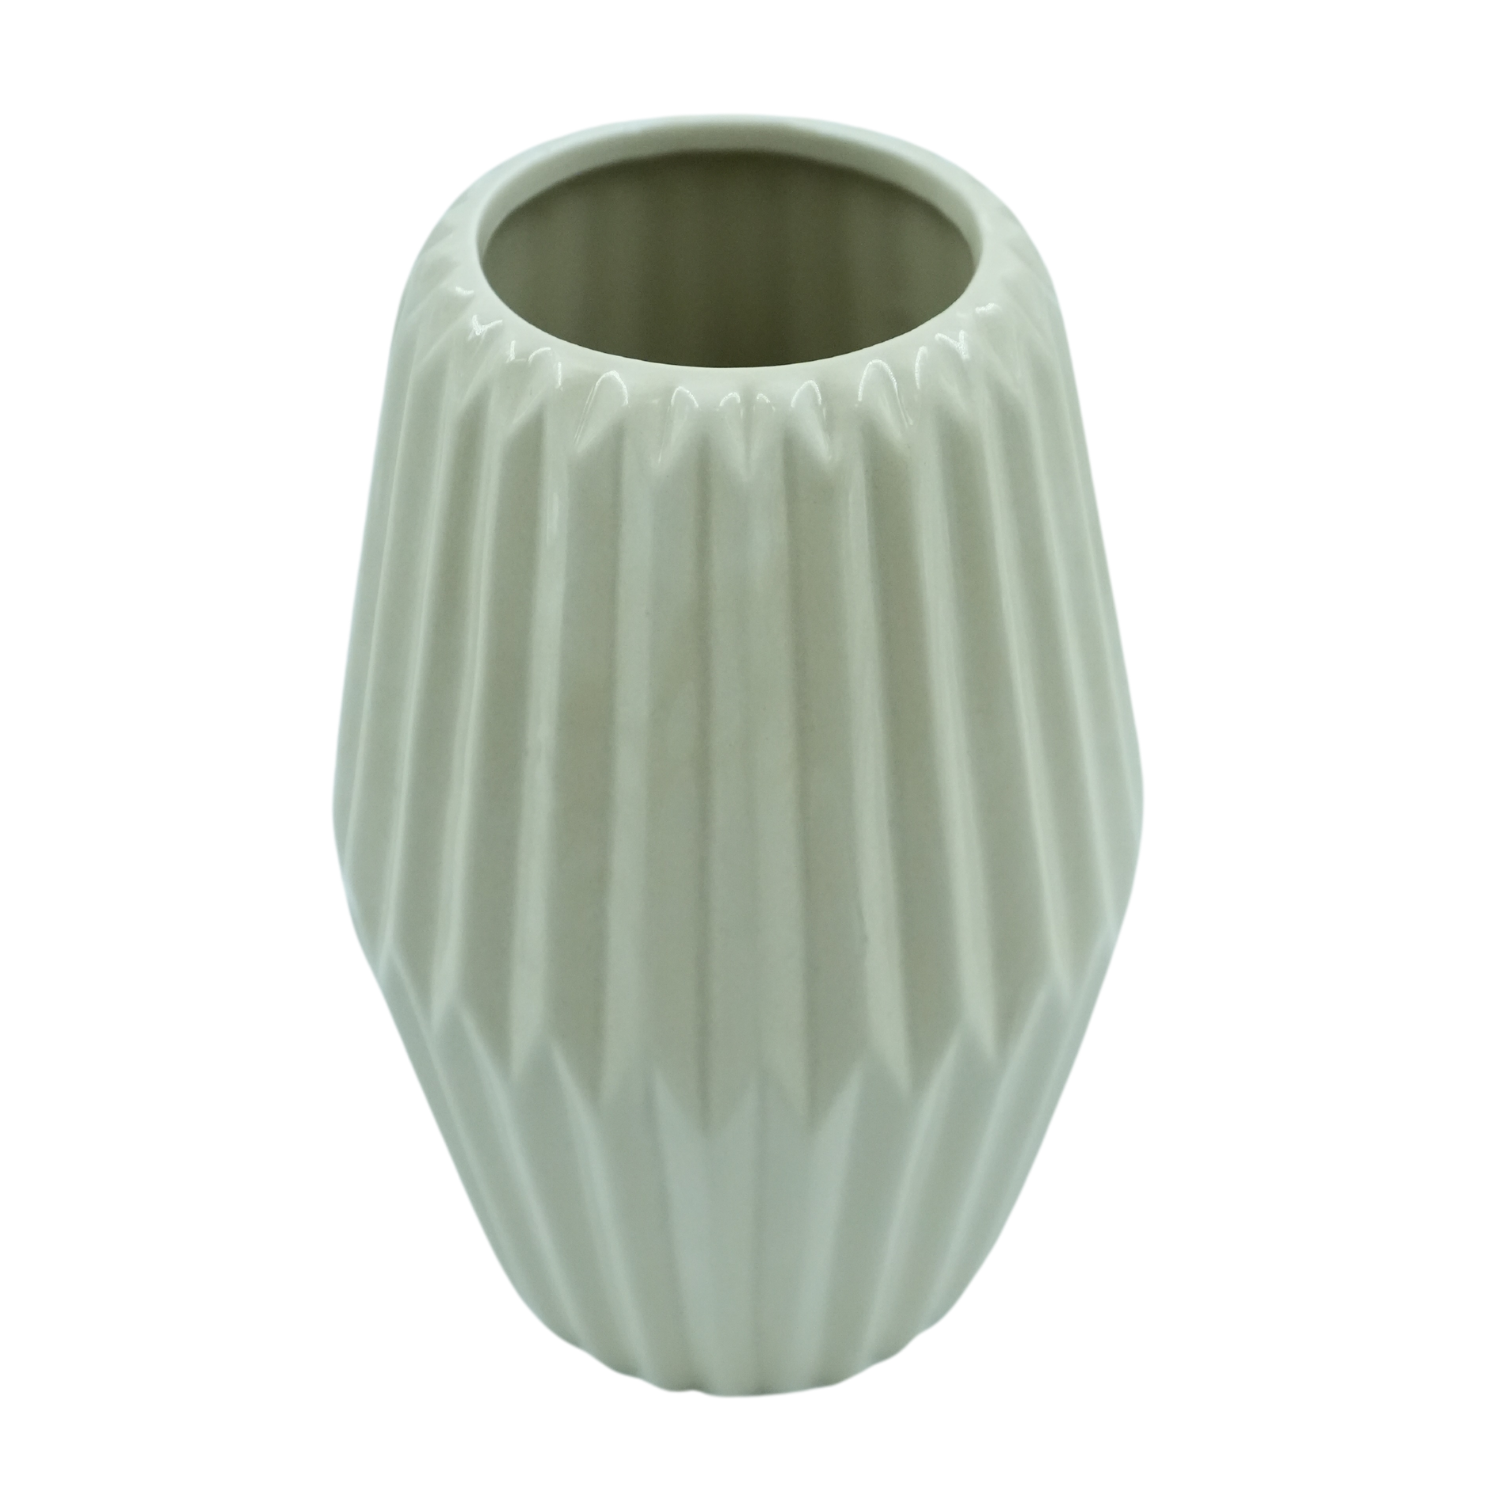 Designer Ceramic Pot (Ivory, Glossy Finish,Large) for Home & Indoor Plant Decor